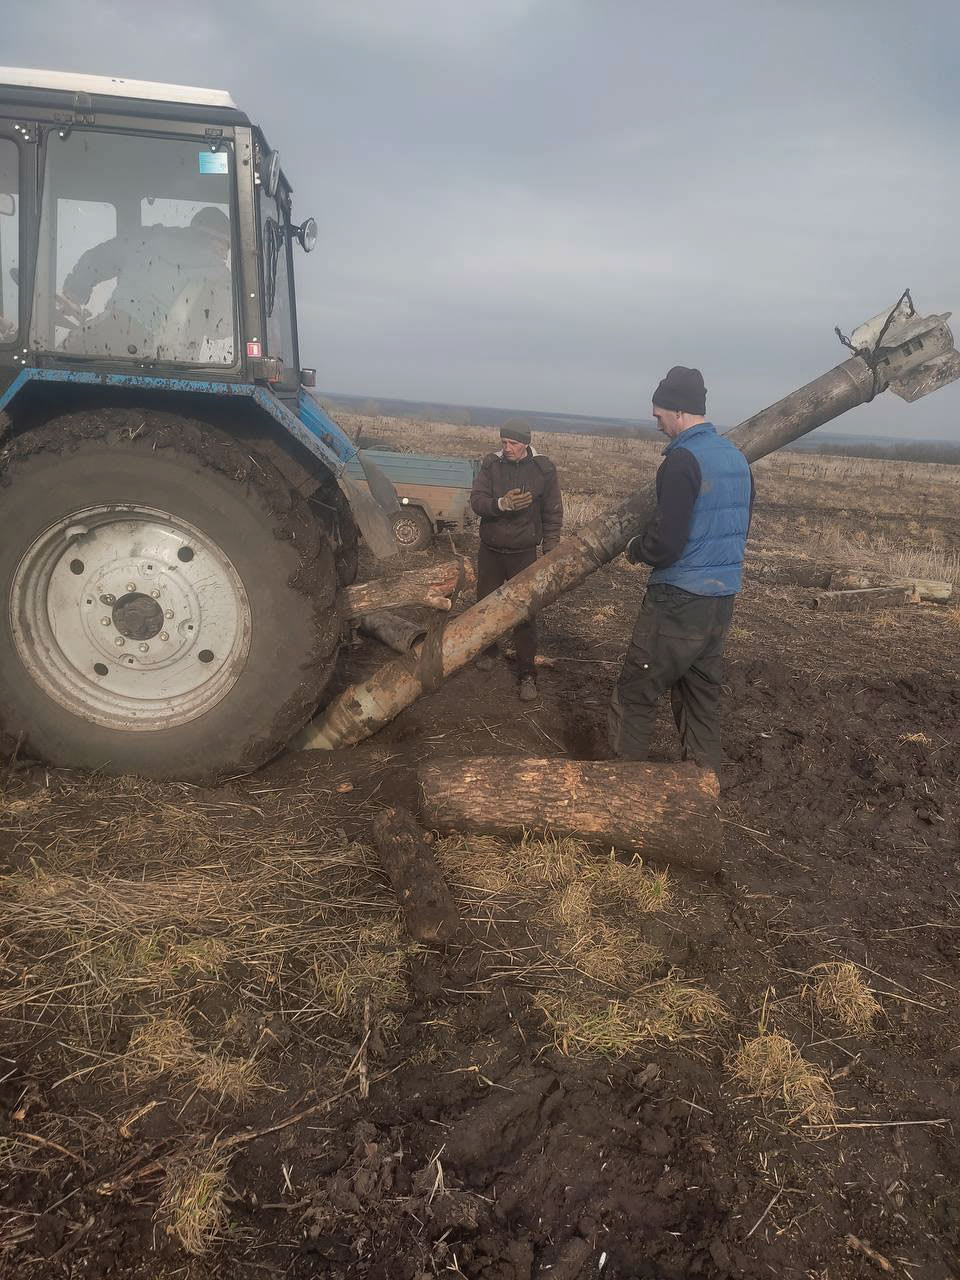 A Hurricane Uragan rocket munition in a local farmer's field in Ukraine.